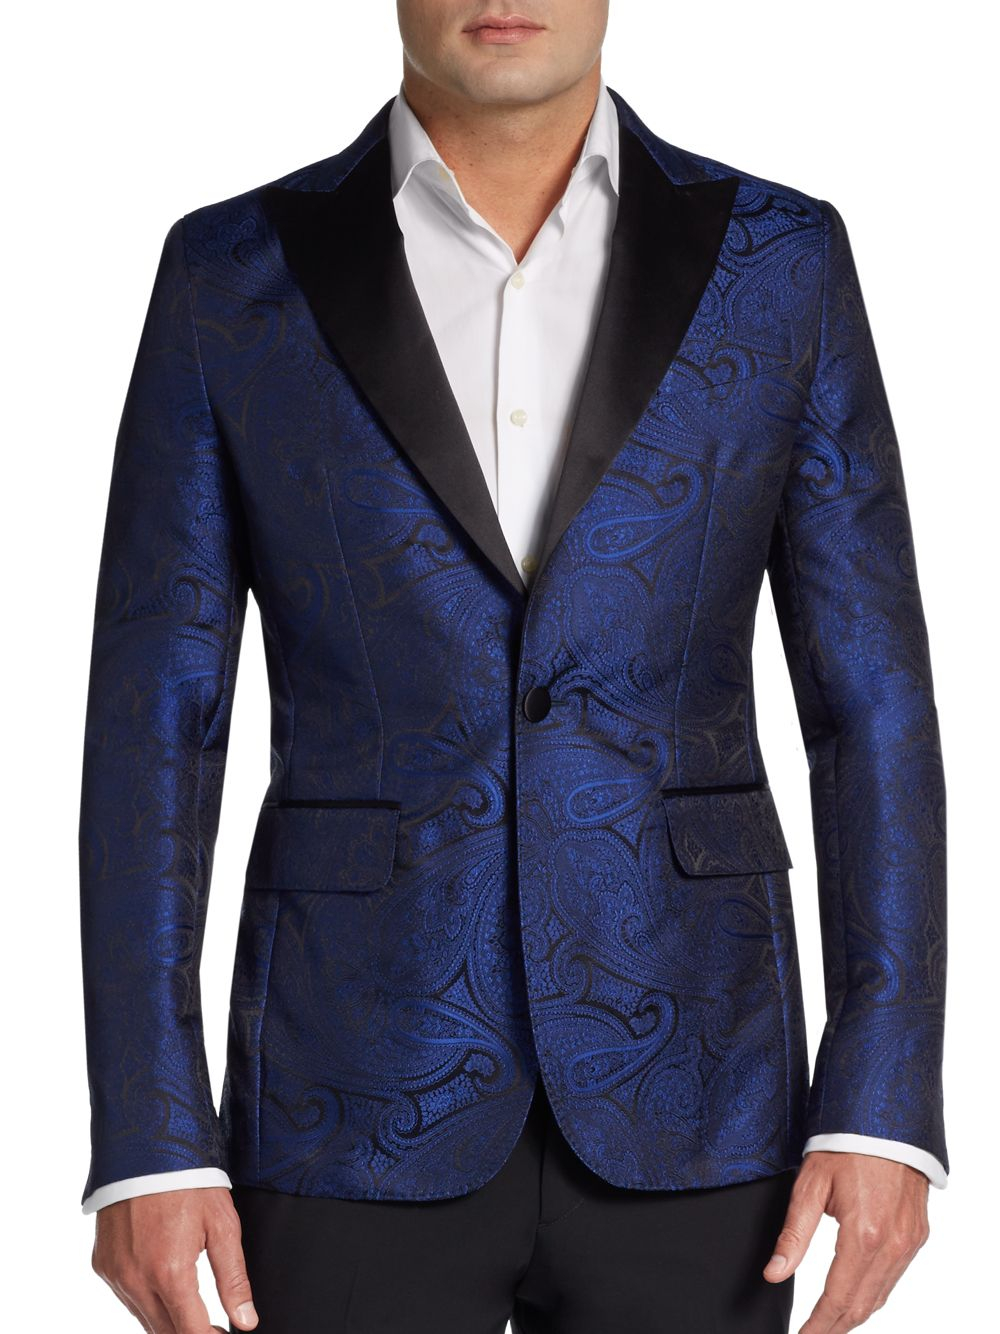 Lyst Dsquared² Paisley Jacquard Dinner Jacket in Blue for Men